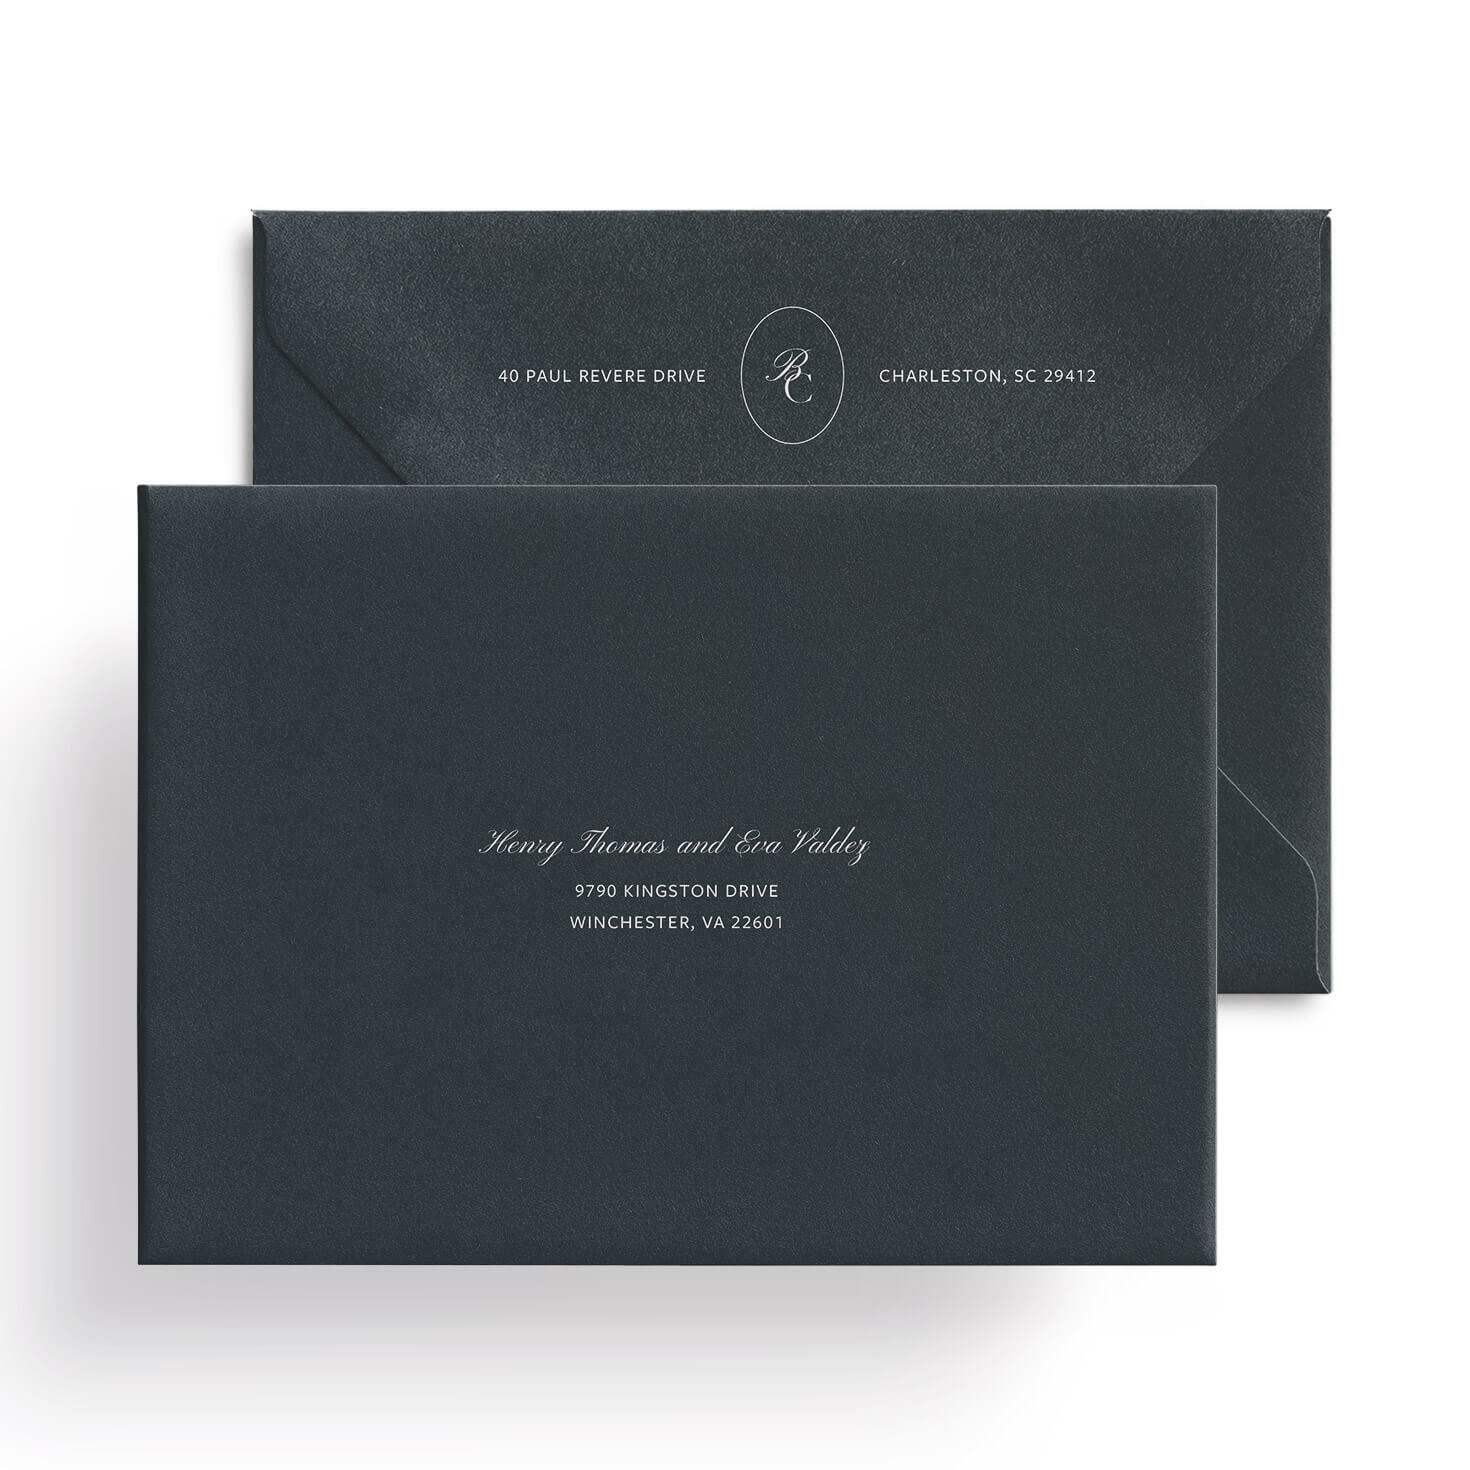 Digital address printing for wedding invitations inspired by Charleston, South Carolina.